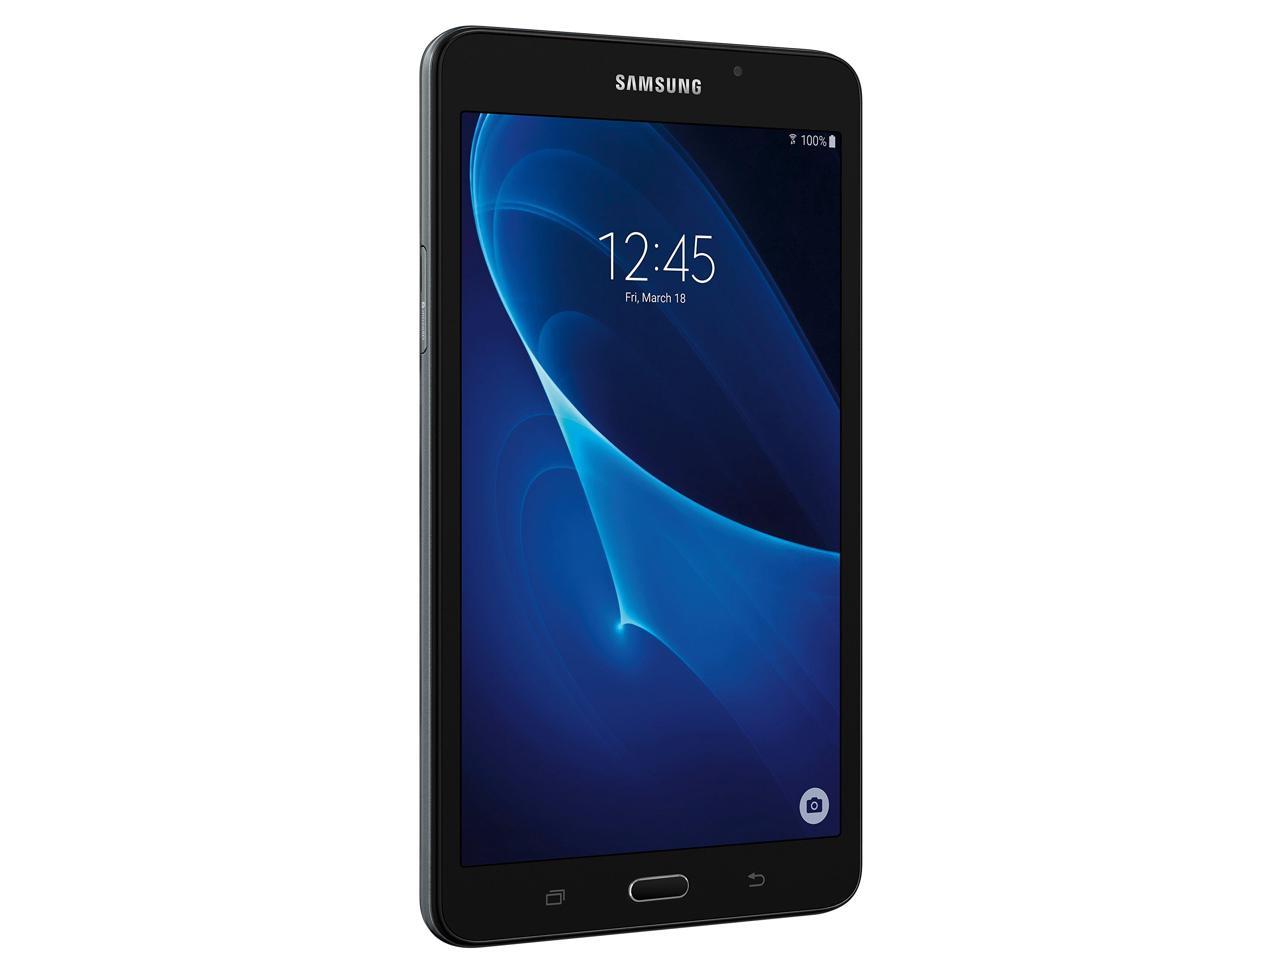 SAMSUNG Galaxy Tab A SM-T280NZKAXAR Quad Core Processor 1.30 GHz 1.5 GB Memory 8 GB Flash Storage 7.0" 1280 x 800 Tablet Android 5.1 (Lollipop) Black